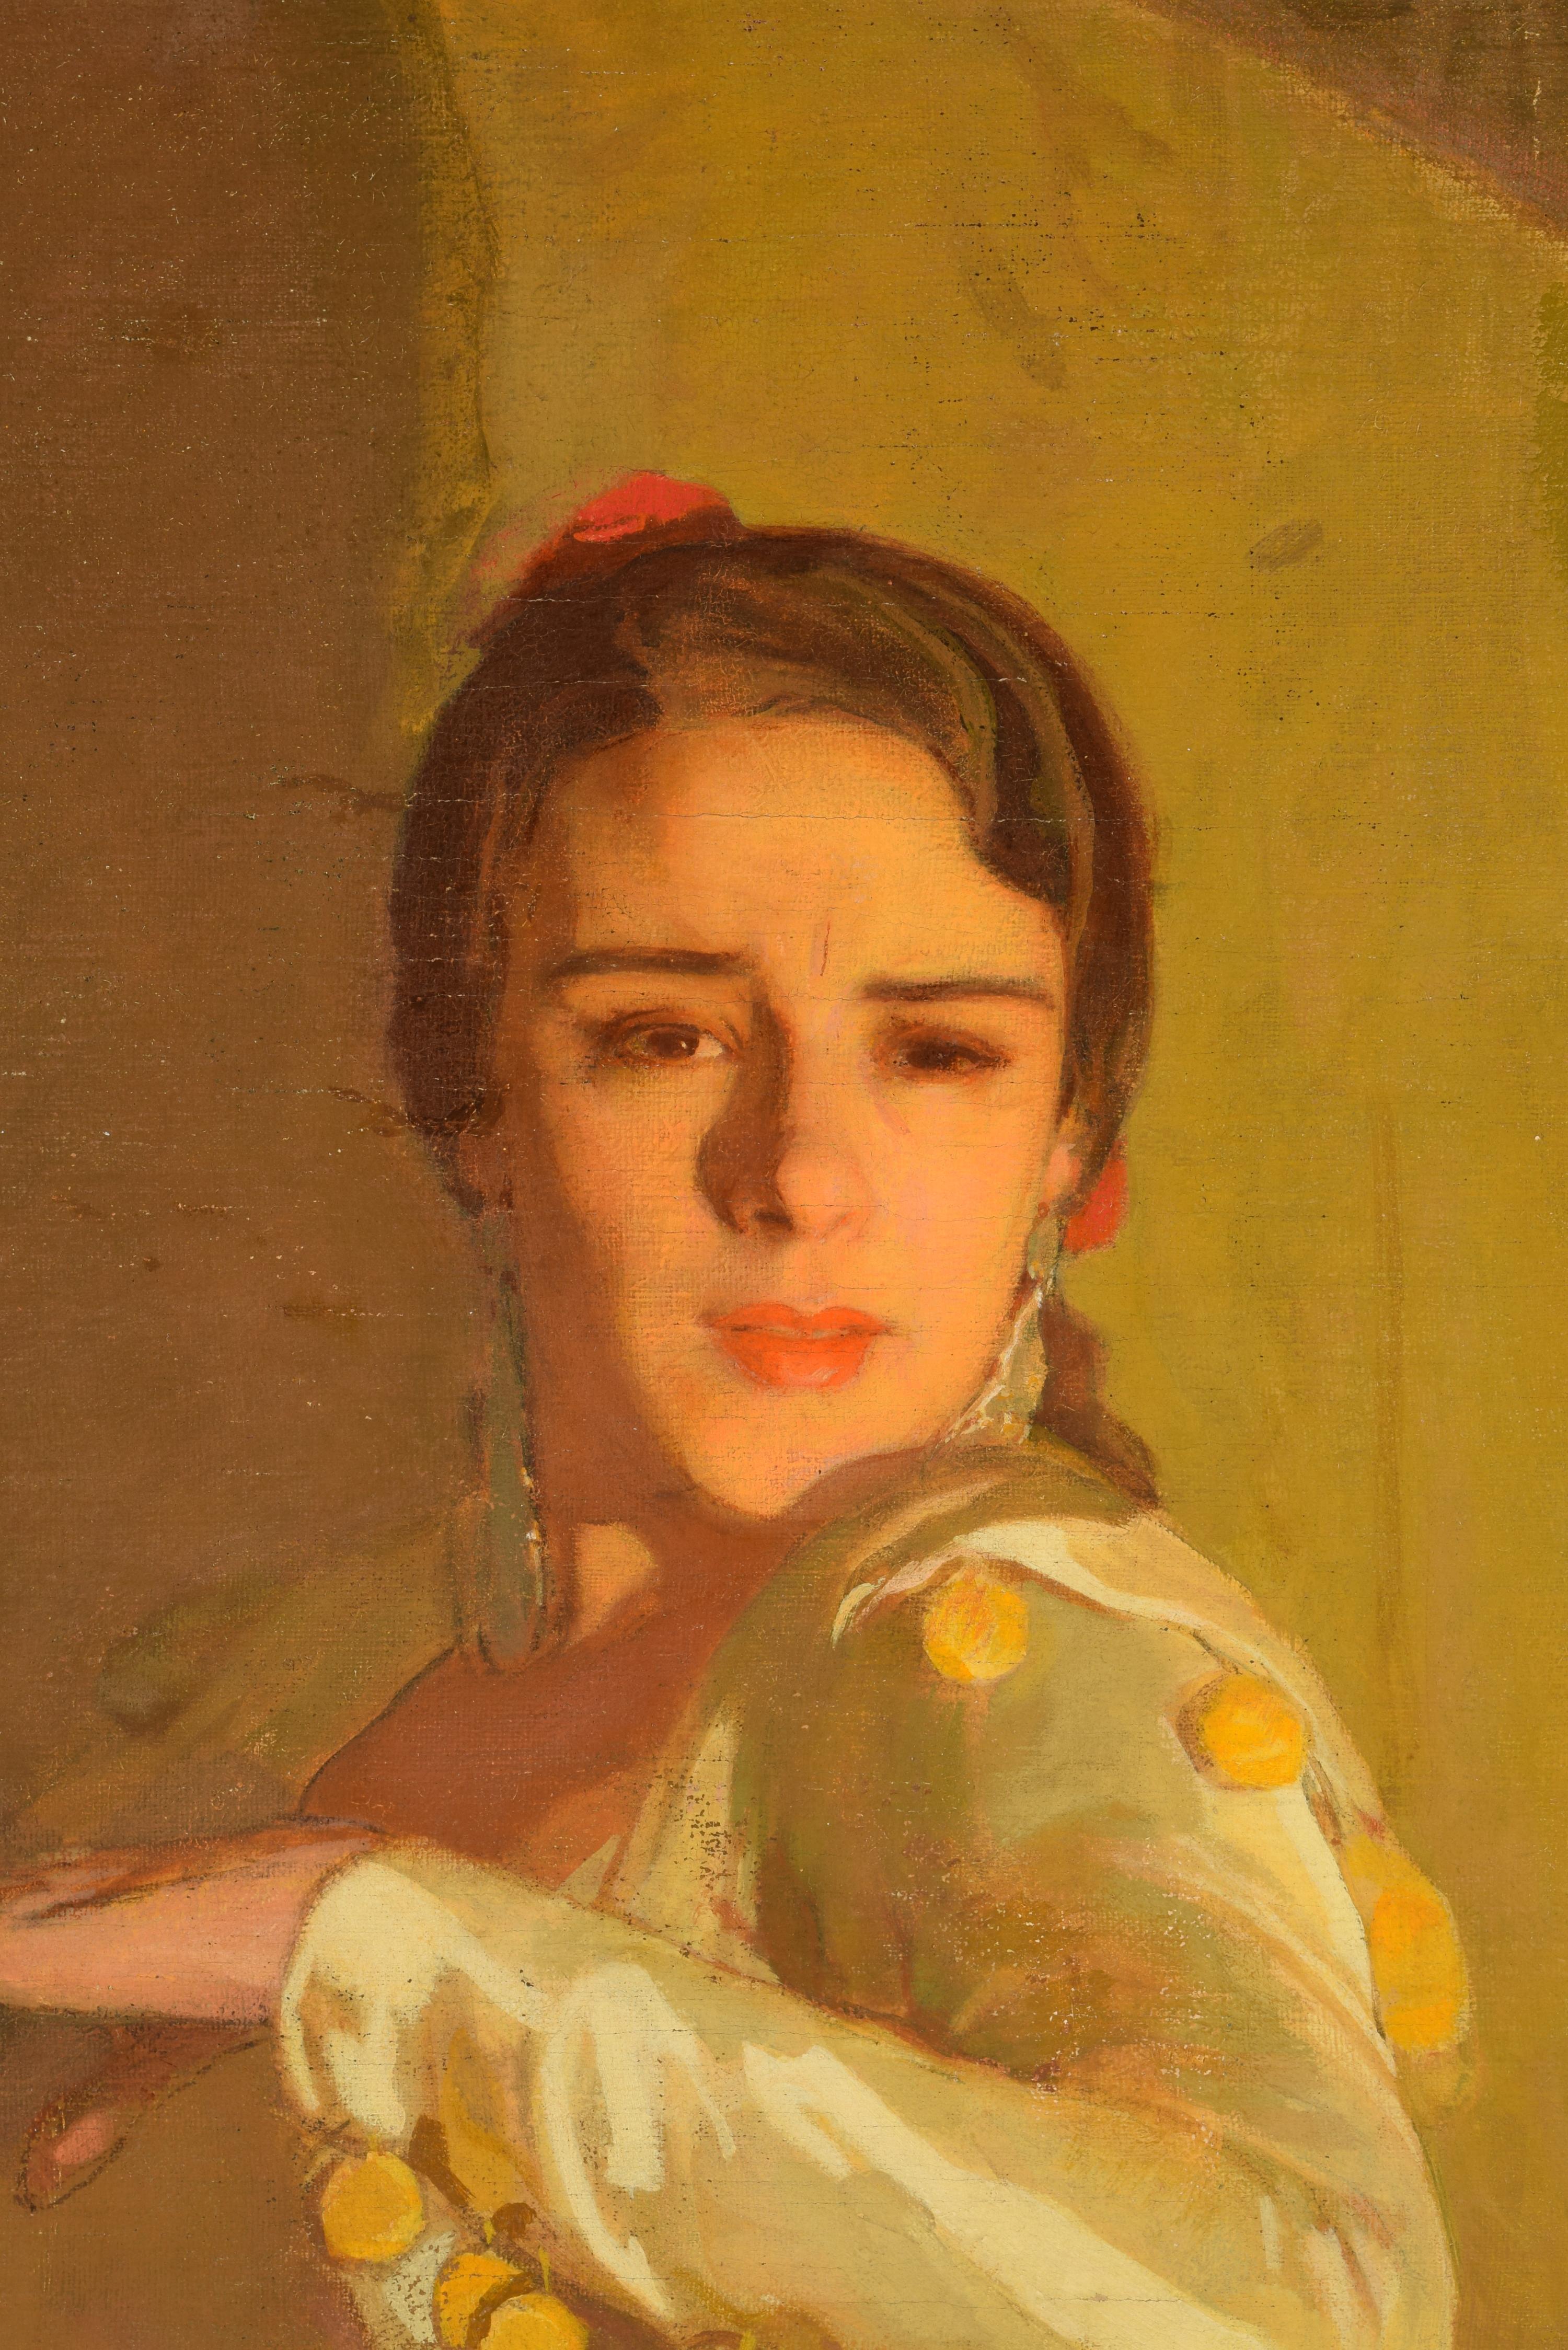 Mid-20th Century Laura de Santelmo. Oil on canvas. NIETO, Anselmo Miguel, 1934.